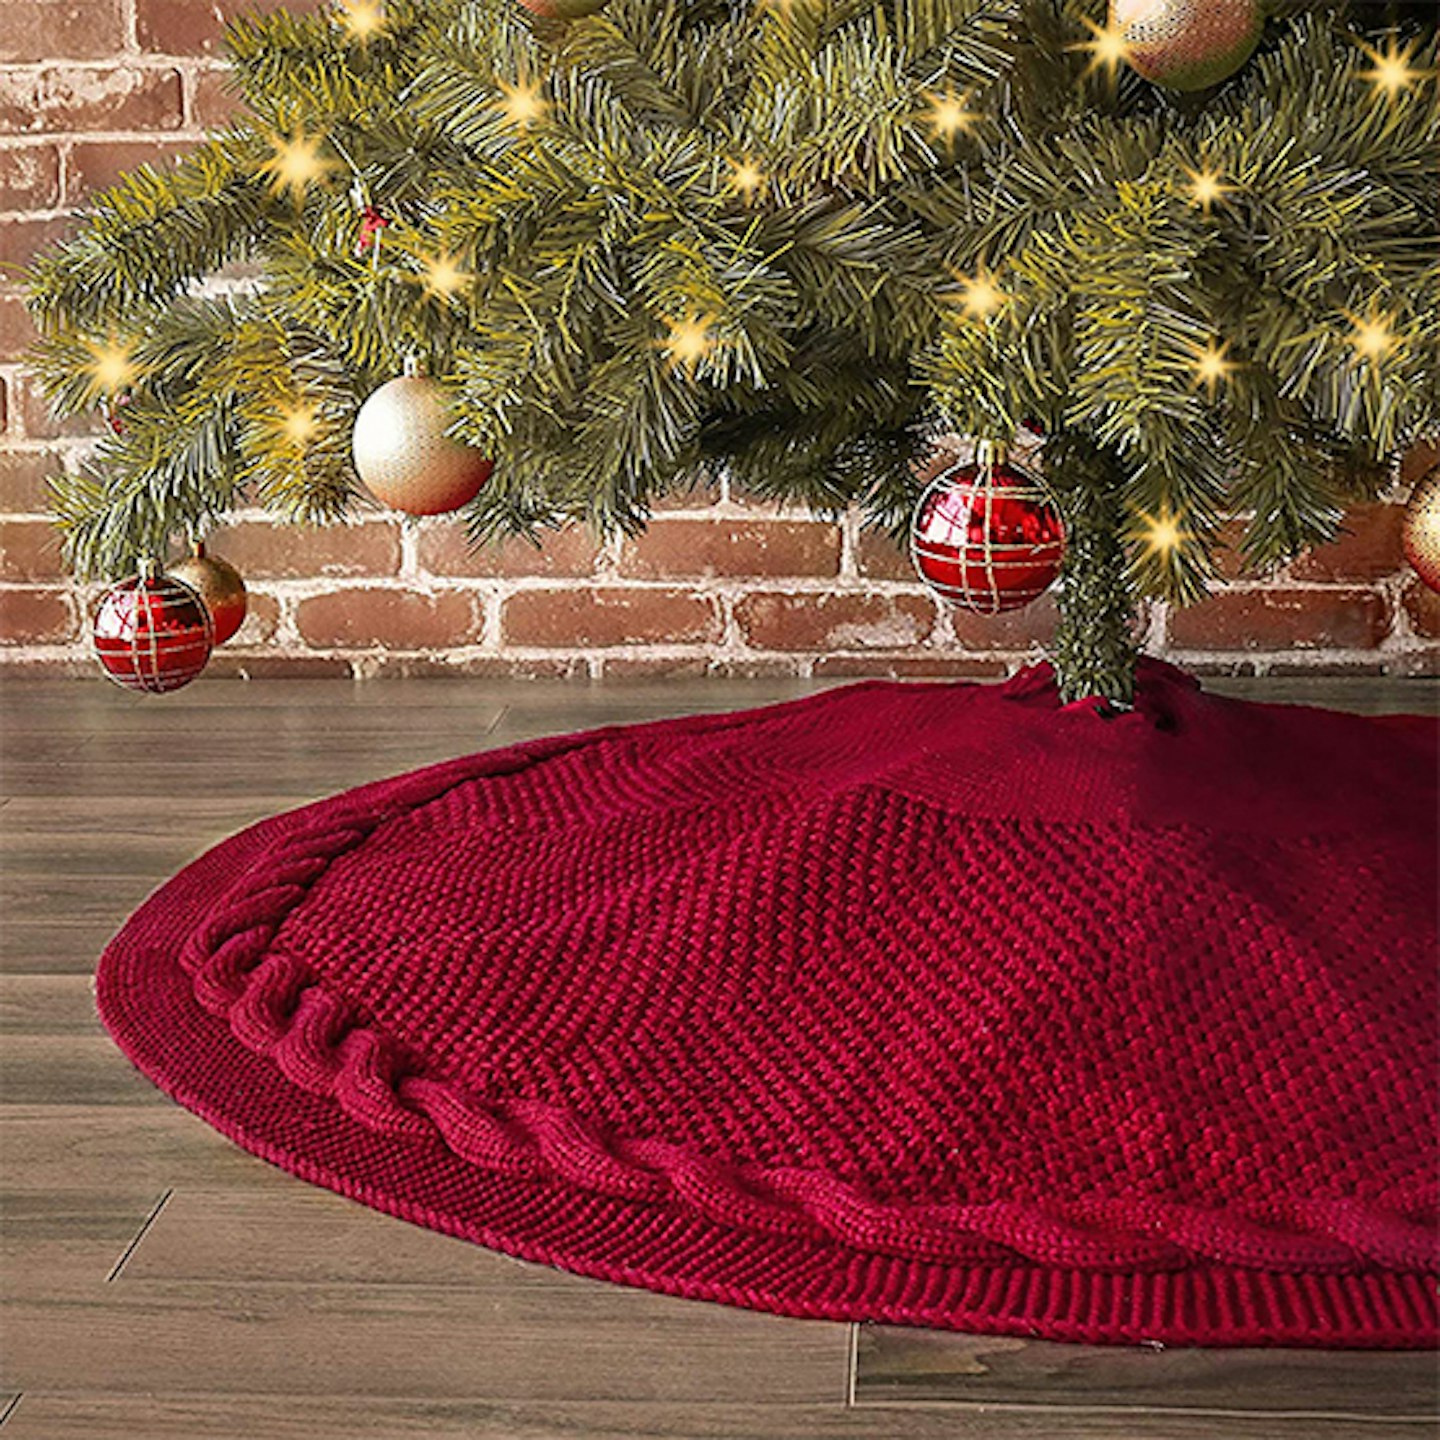 knitted Christmas tree skirt